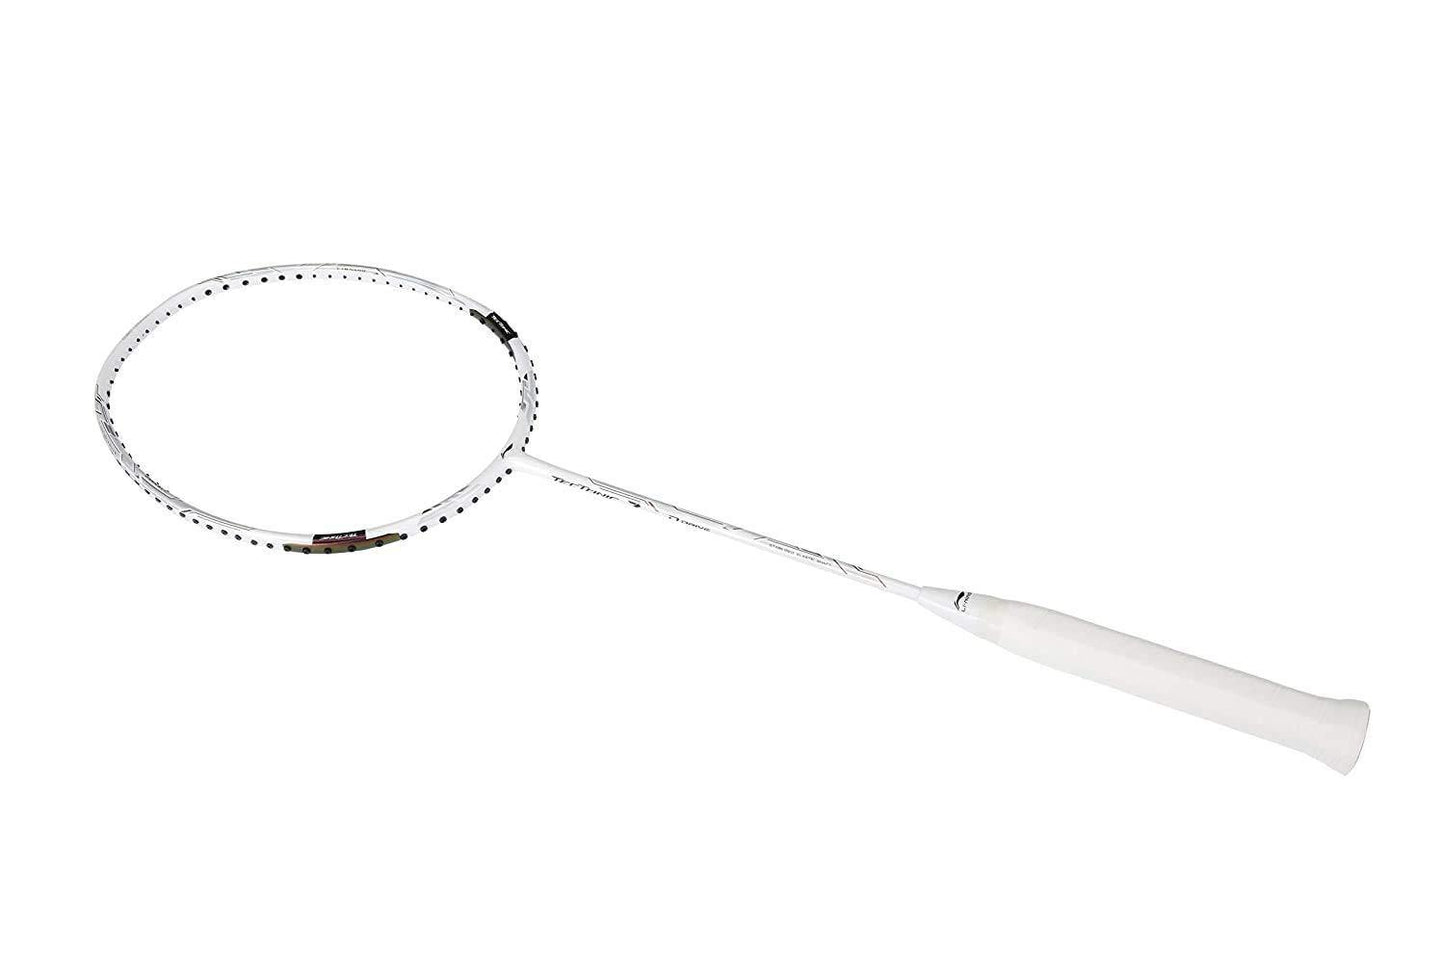 Li-Ning Tectonic 7D Full-Carbon Fiber Badminton Racket, Unstrung White - Best Price online Prokicksports.com